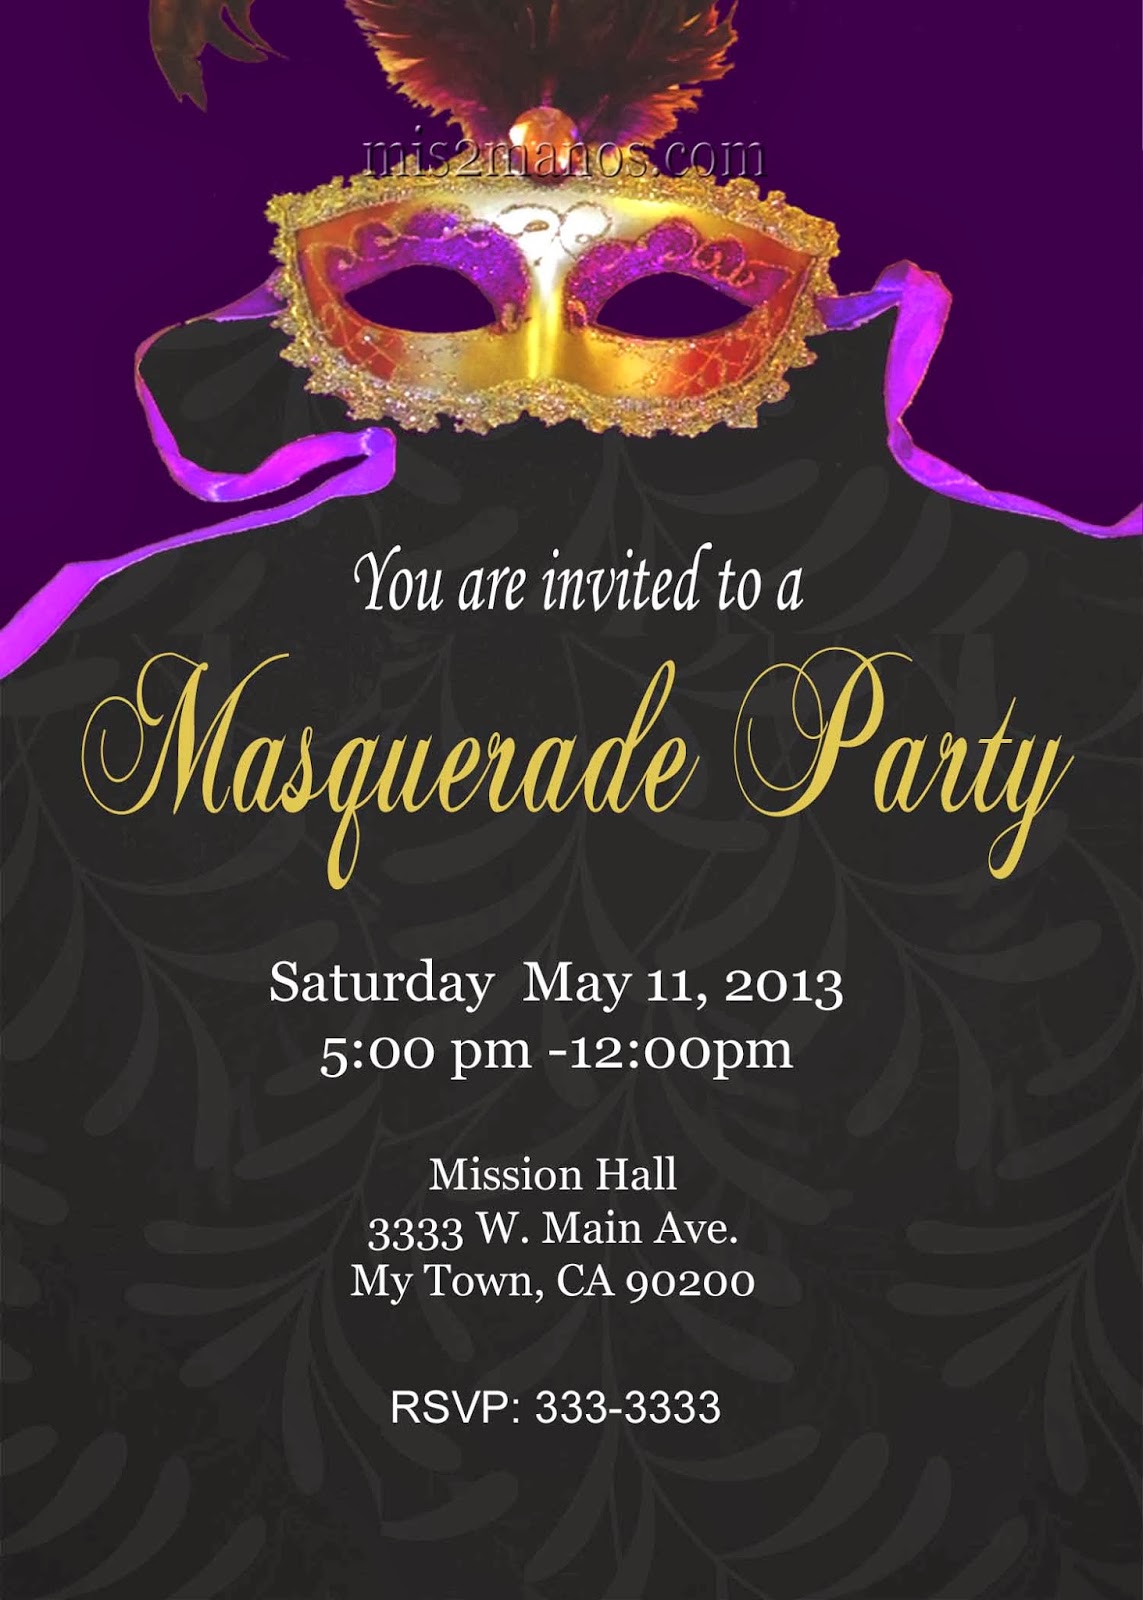 mis-2-manos-made-by-my-hands-masquerade-party-mardi-gras-invitations